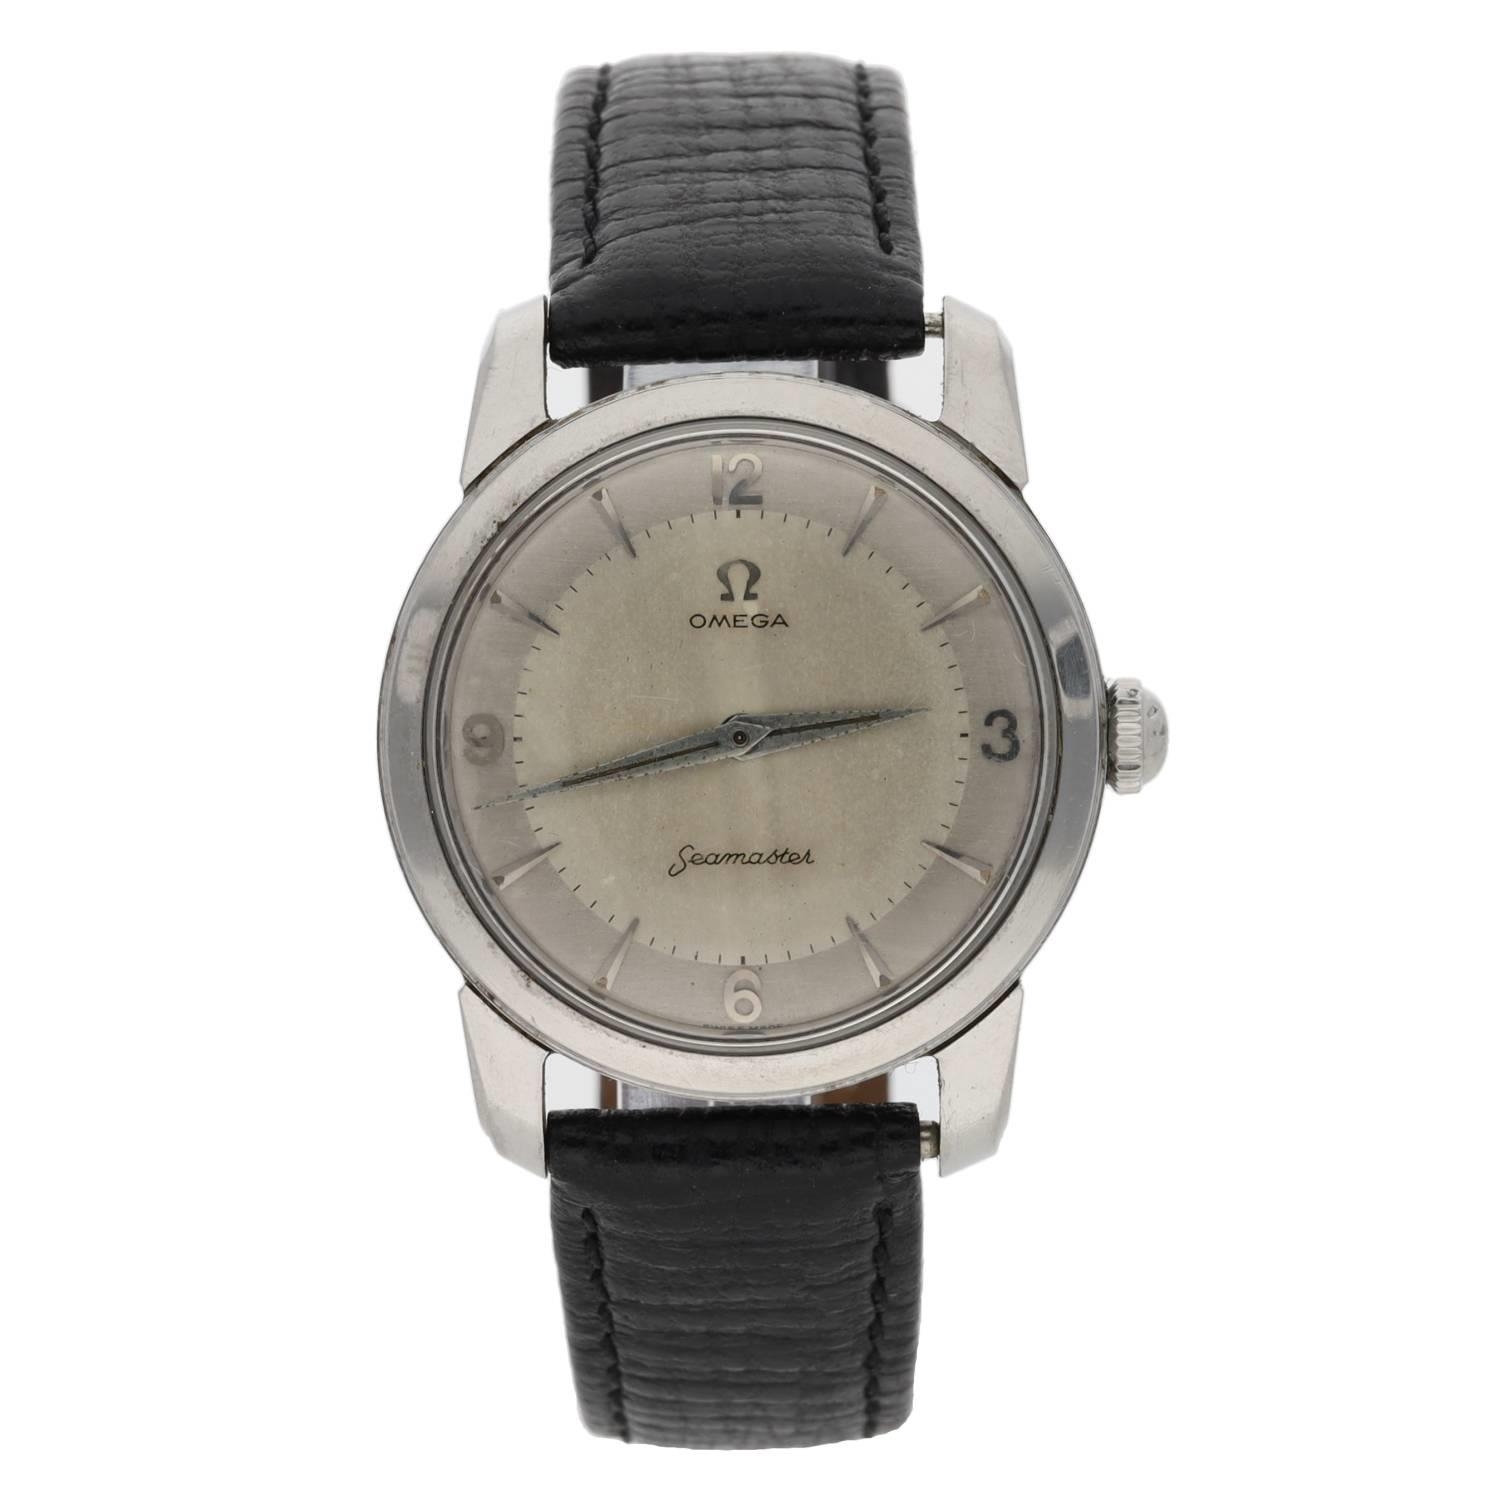 Omega Seamaster stainless steel gentleman's wristwatch, case no. 910, serial no. 15712xxx, circa